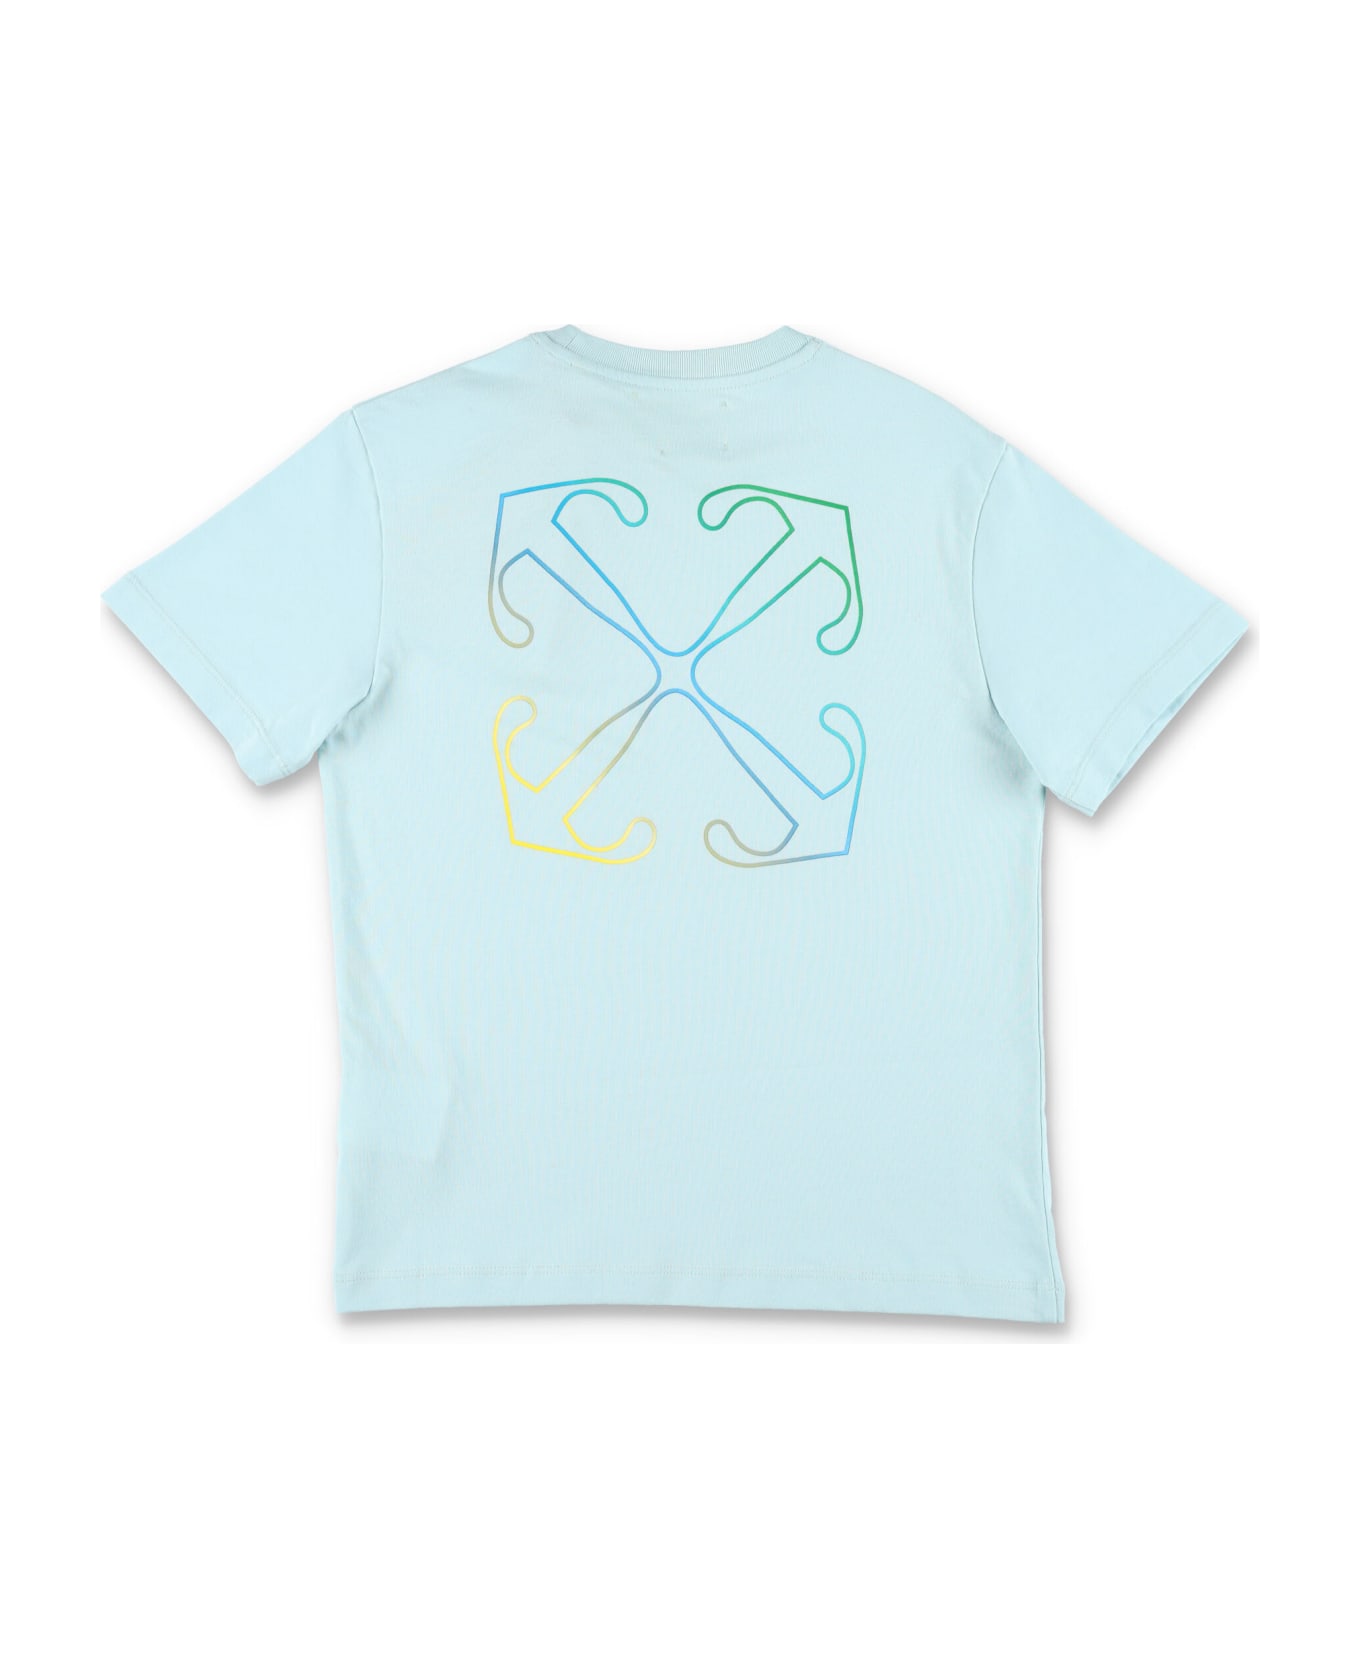 Off-White Arrow Rainbow T-shirt - BLUE